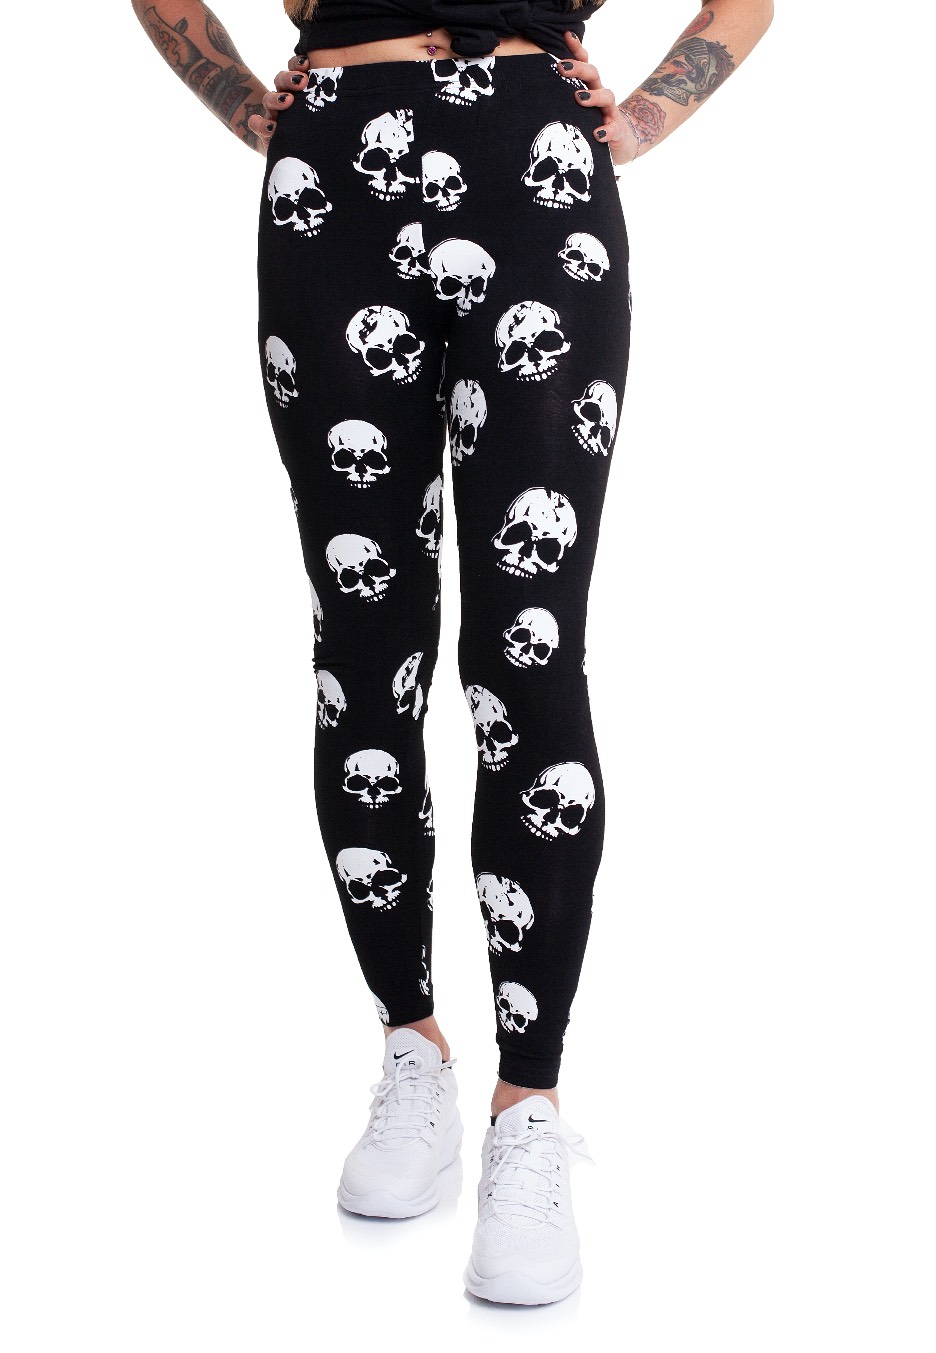 Black Yoga Leggings with White Half Skull pattern – Rip Some Lip Today